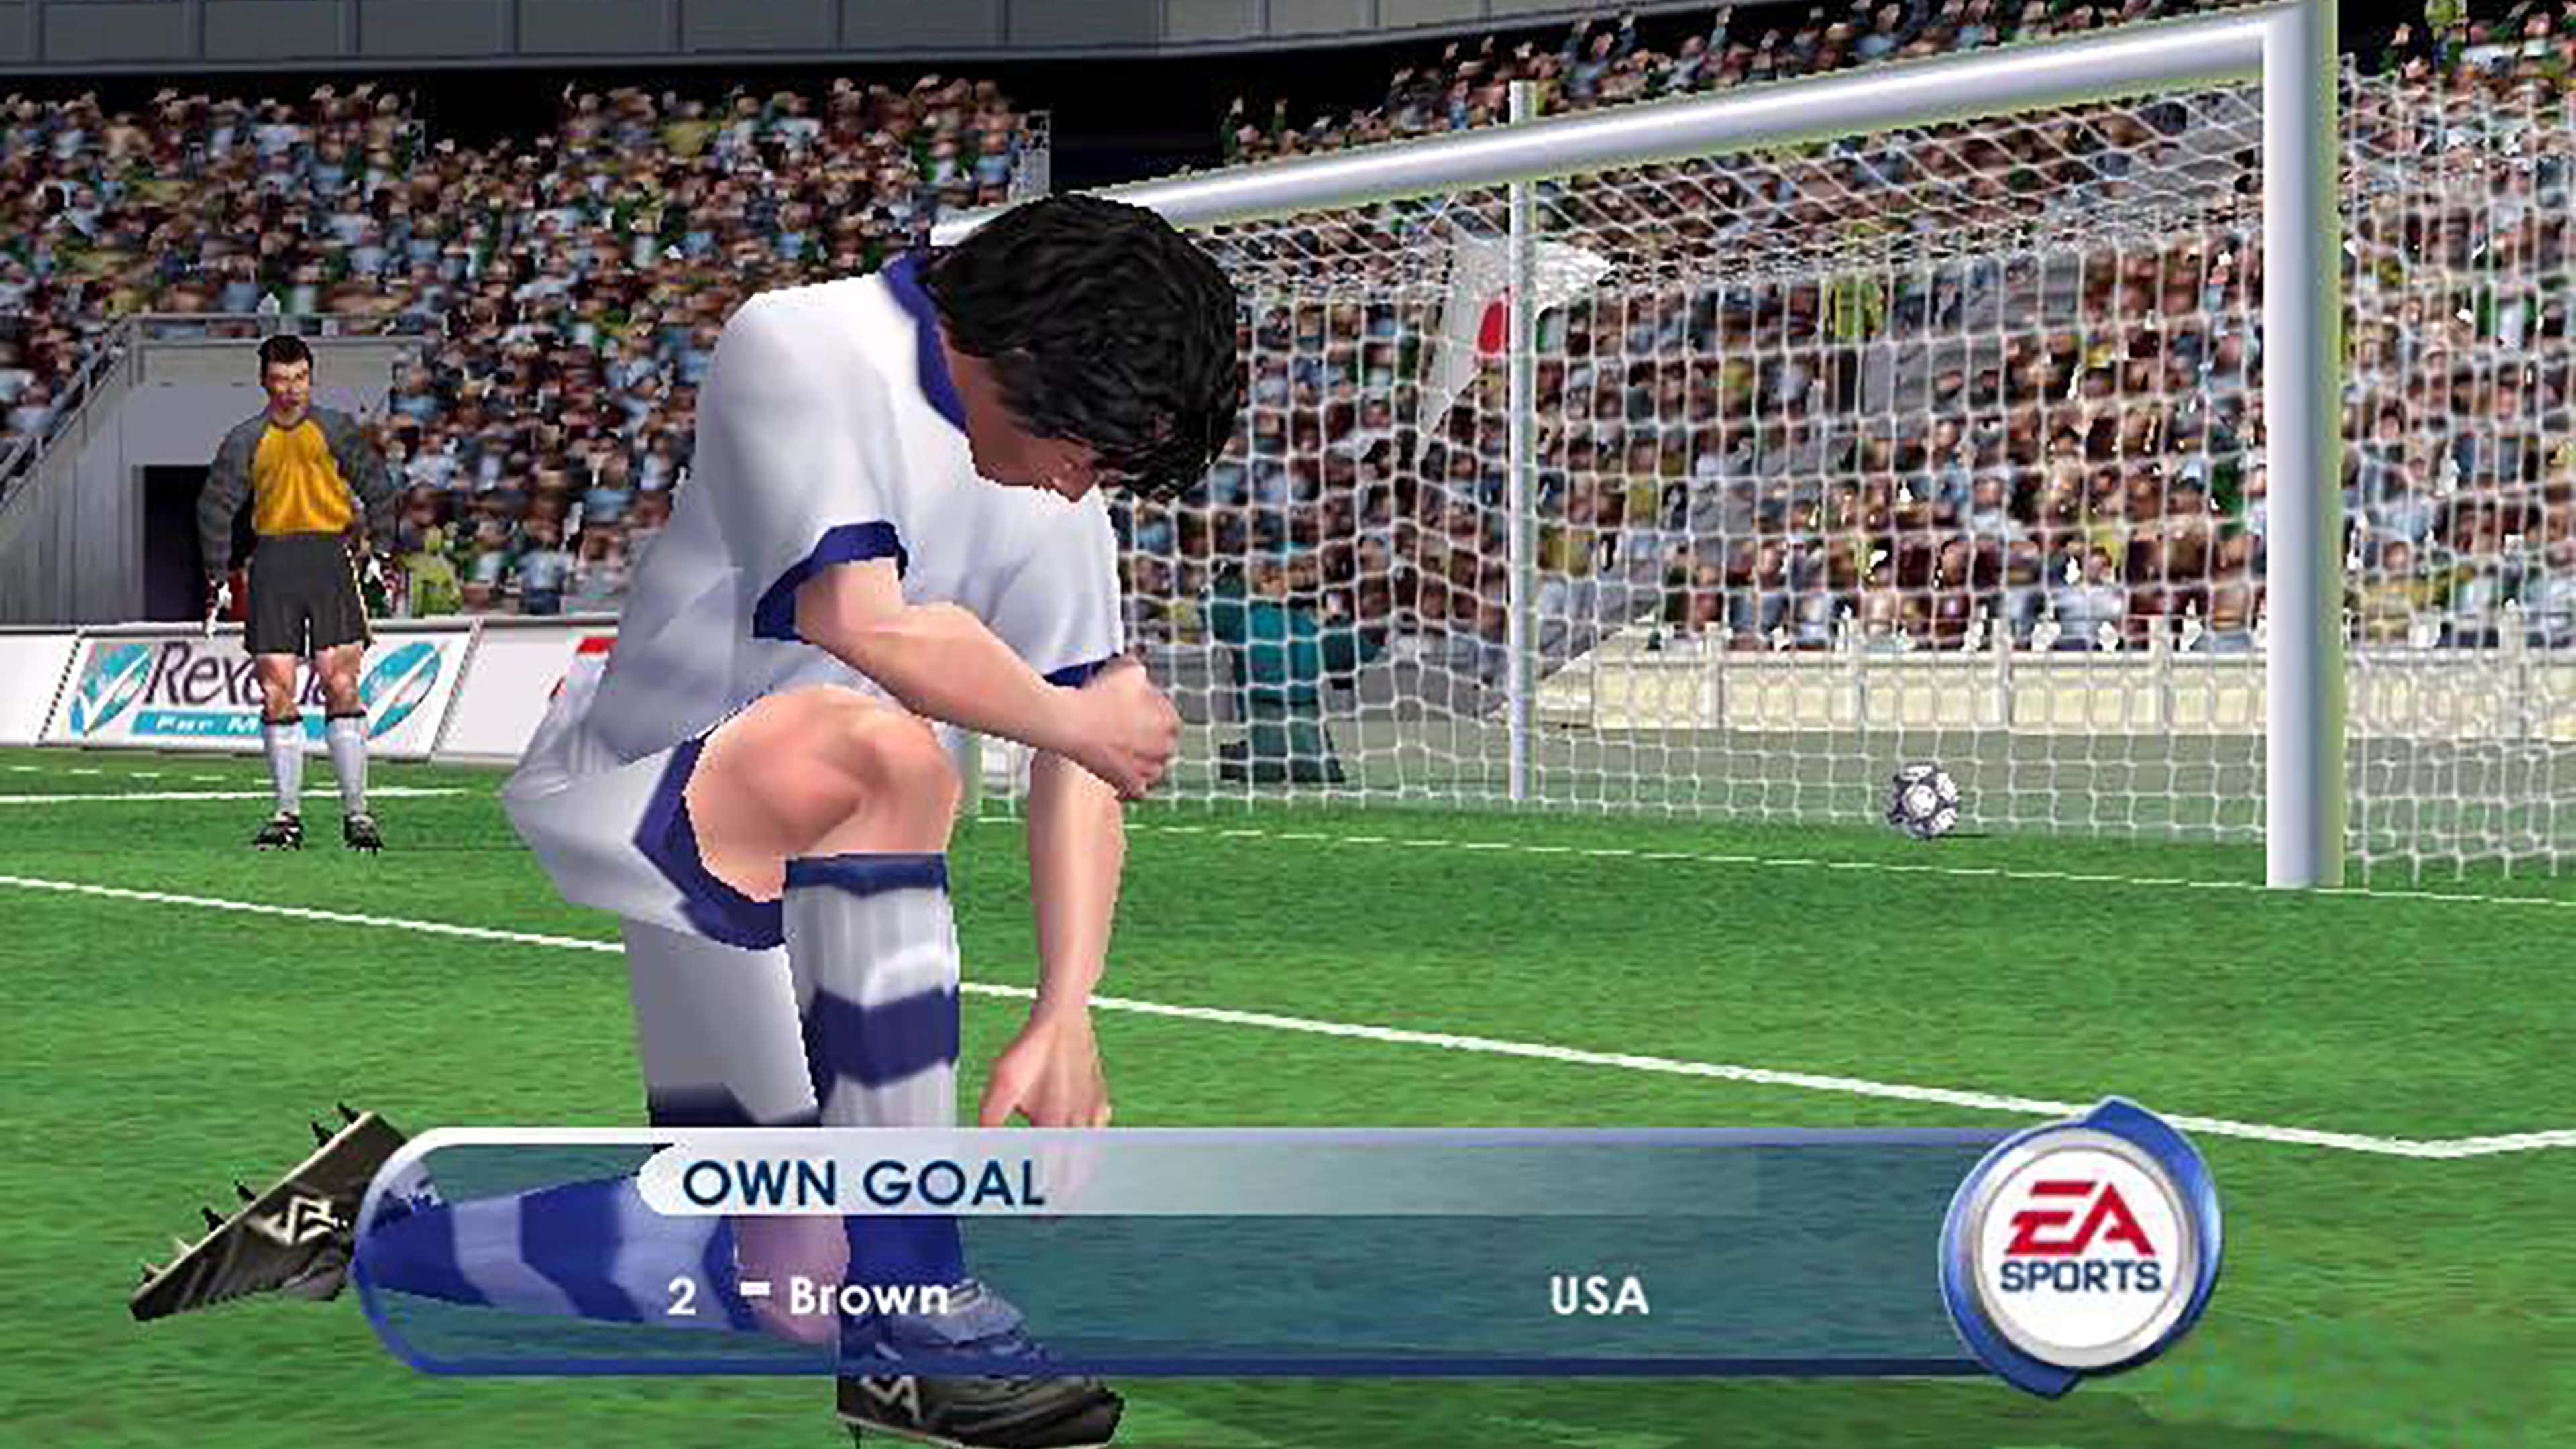 PS3, 360 FIFA 09 get Ultimate Team mode - GameSpot